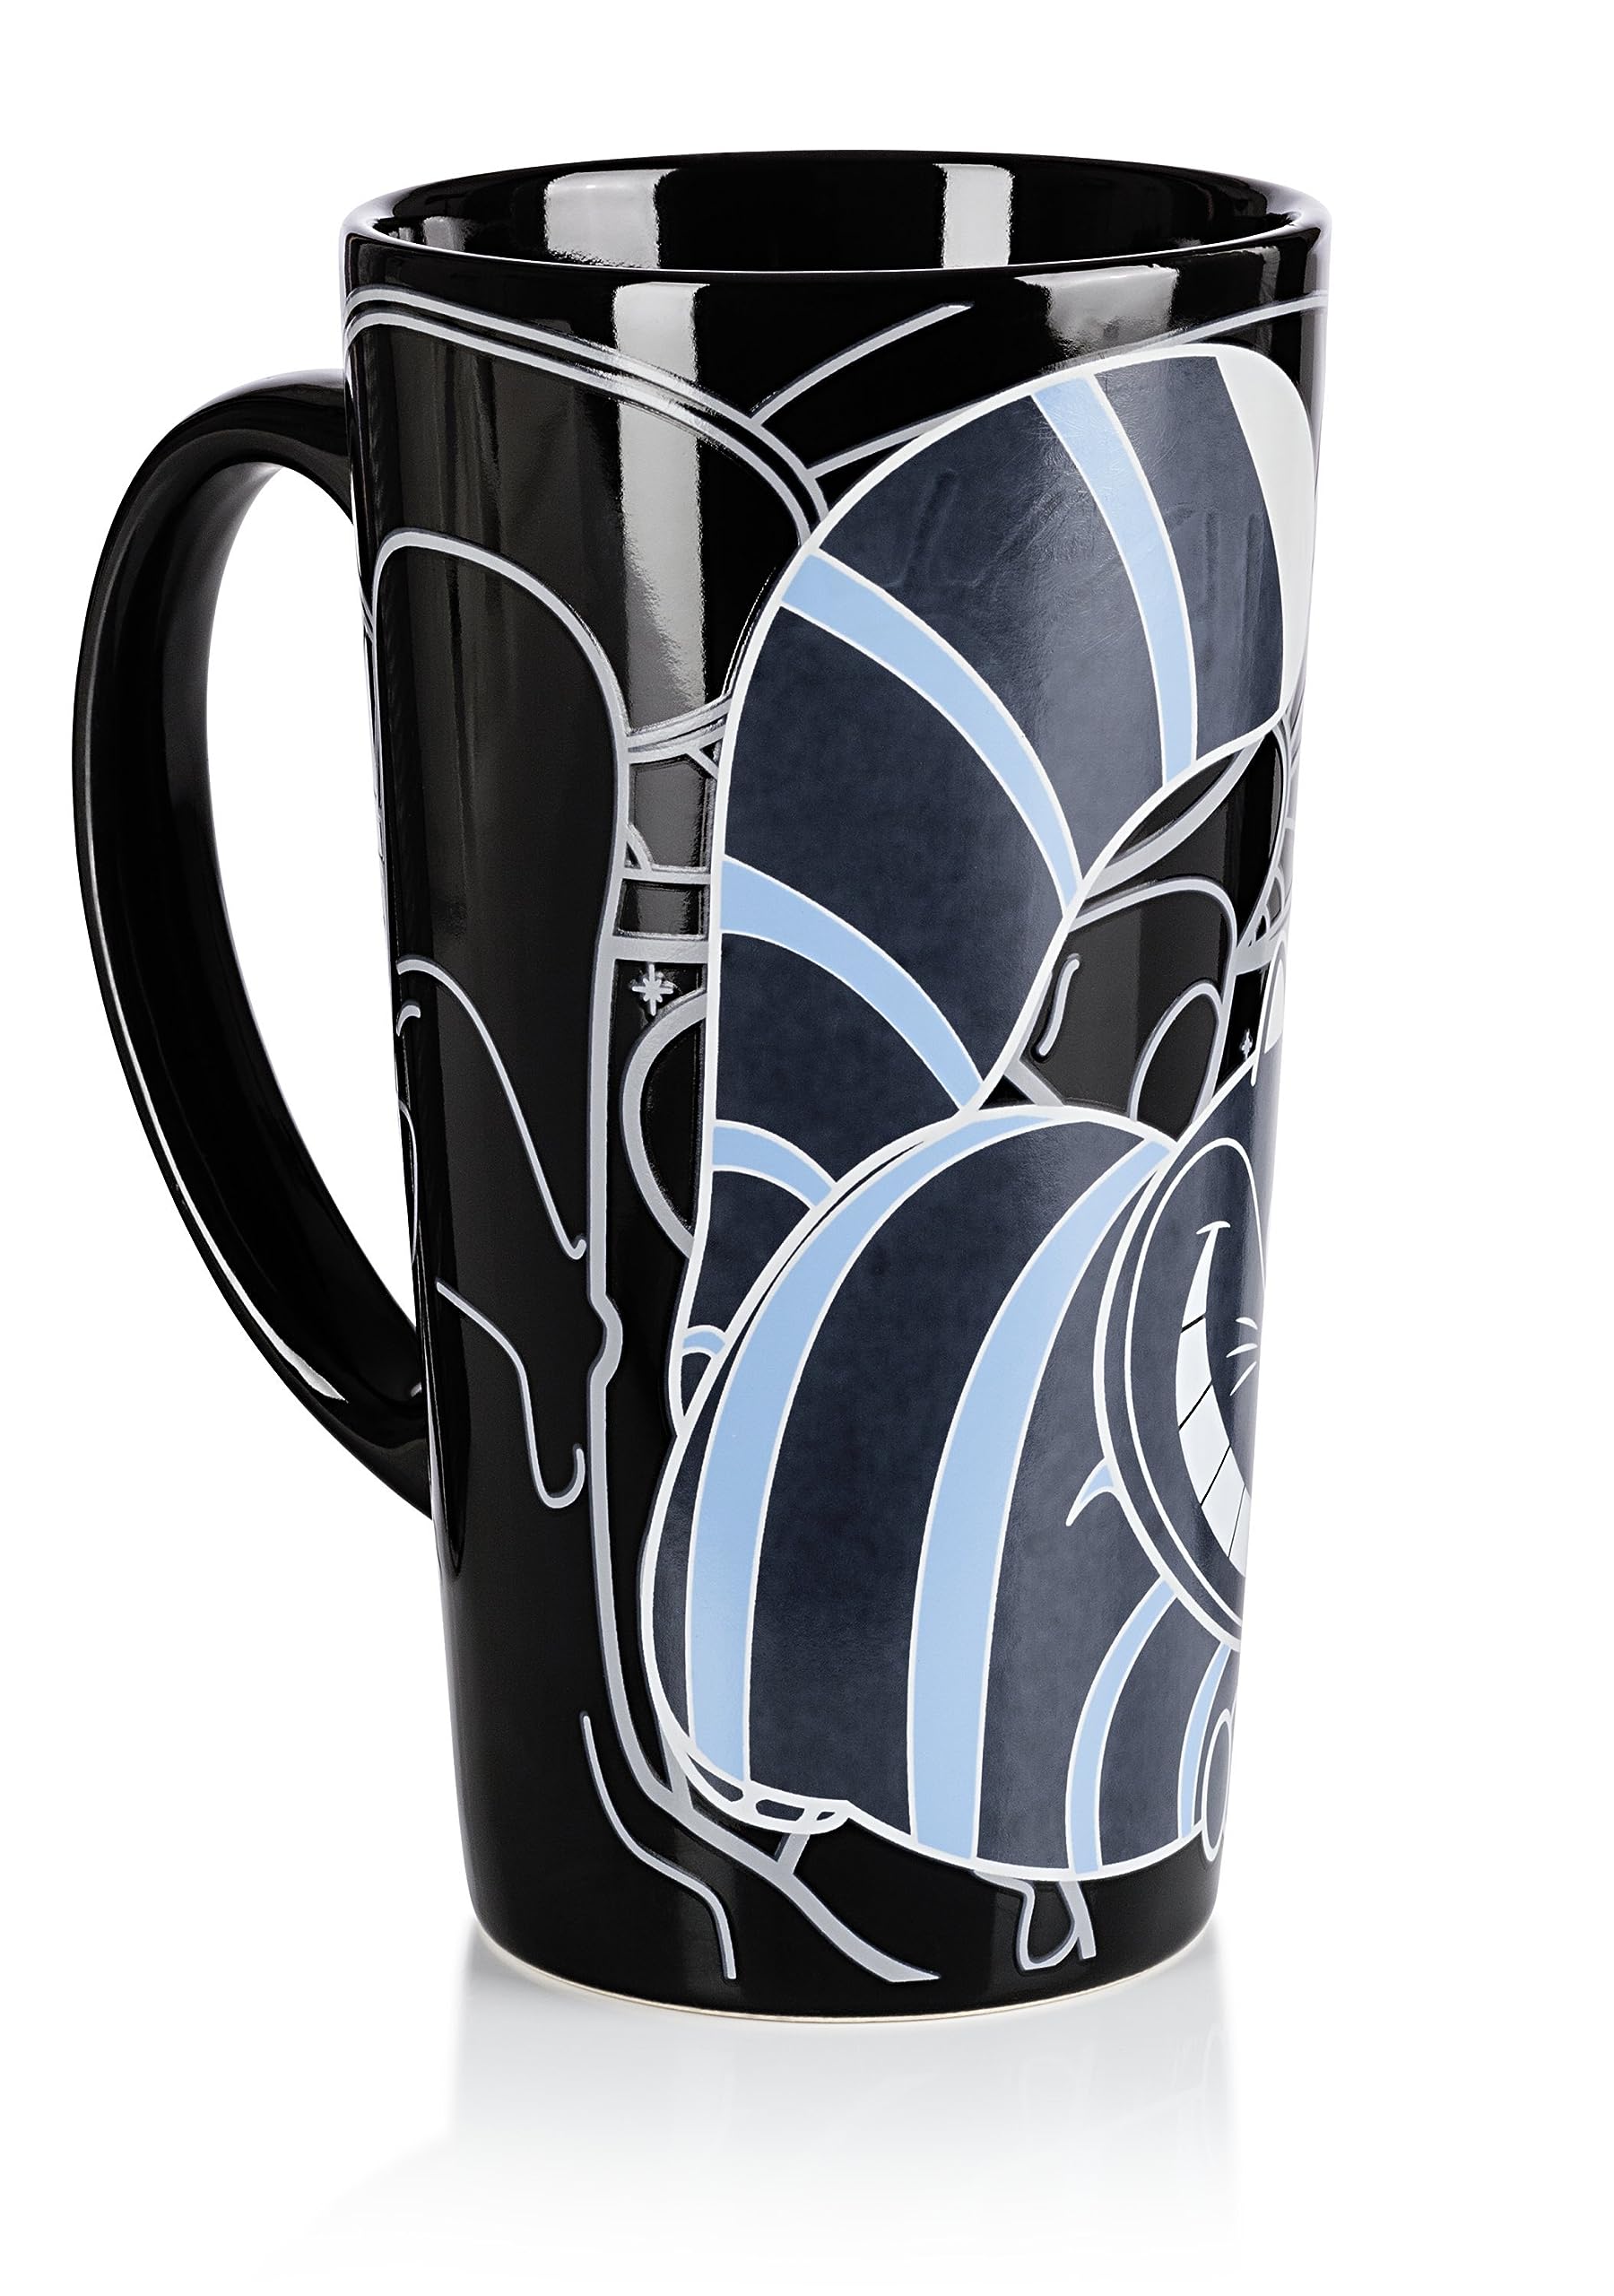 Gift Republic GR450029 Cheshire Cat Heat Chaning Mug, Large (Pack of 1), BLACK